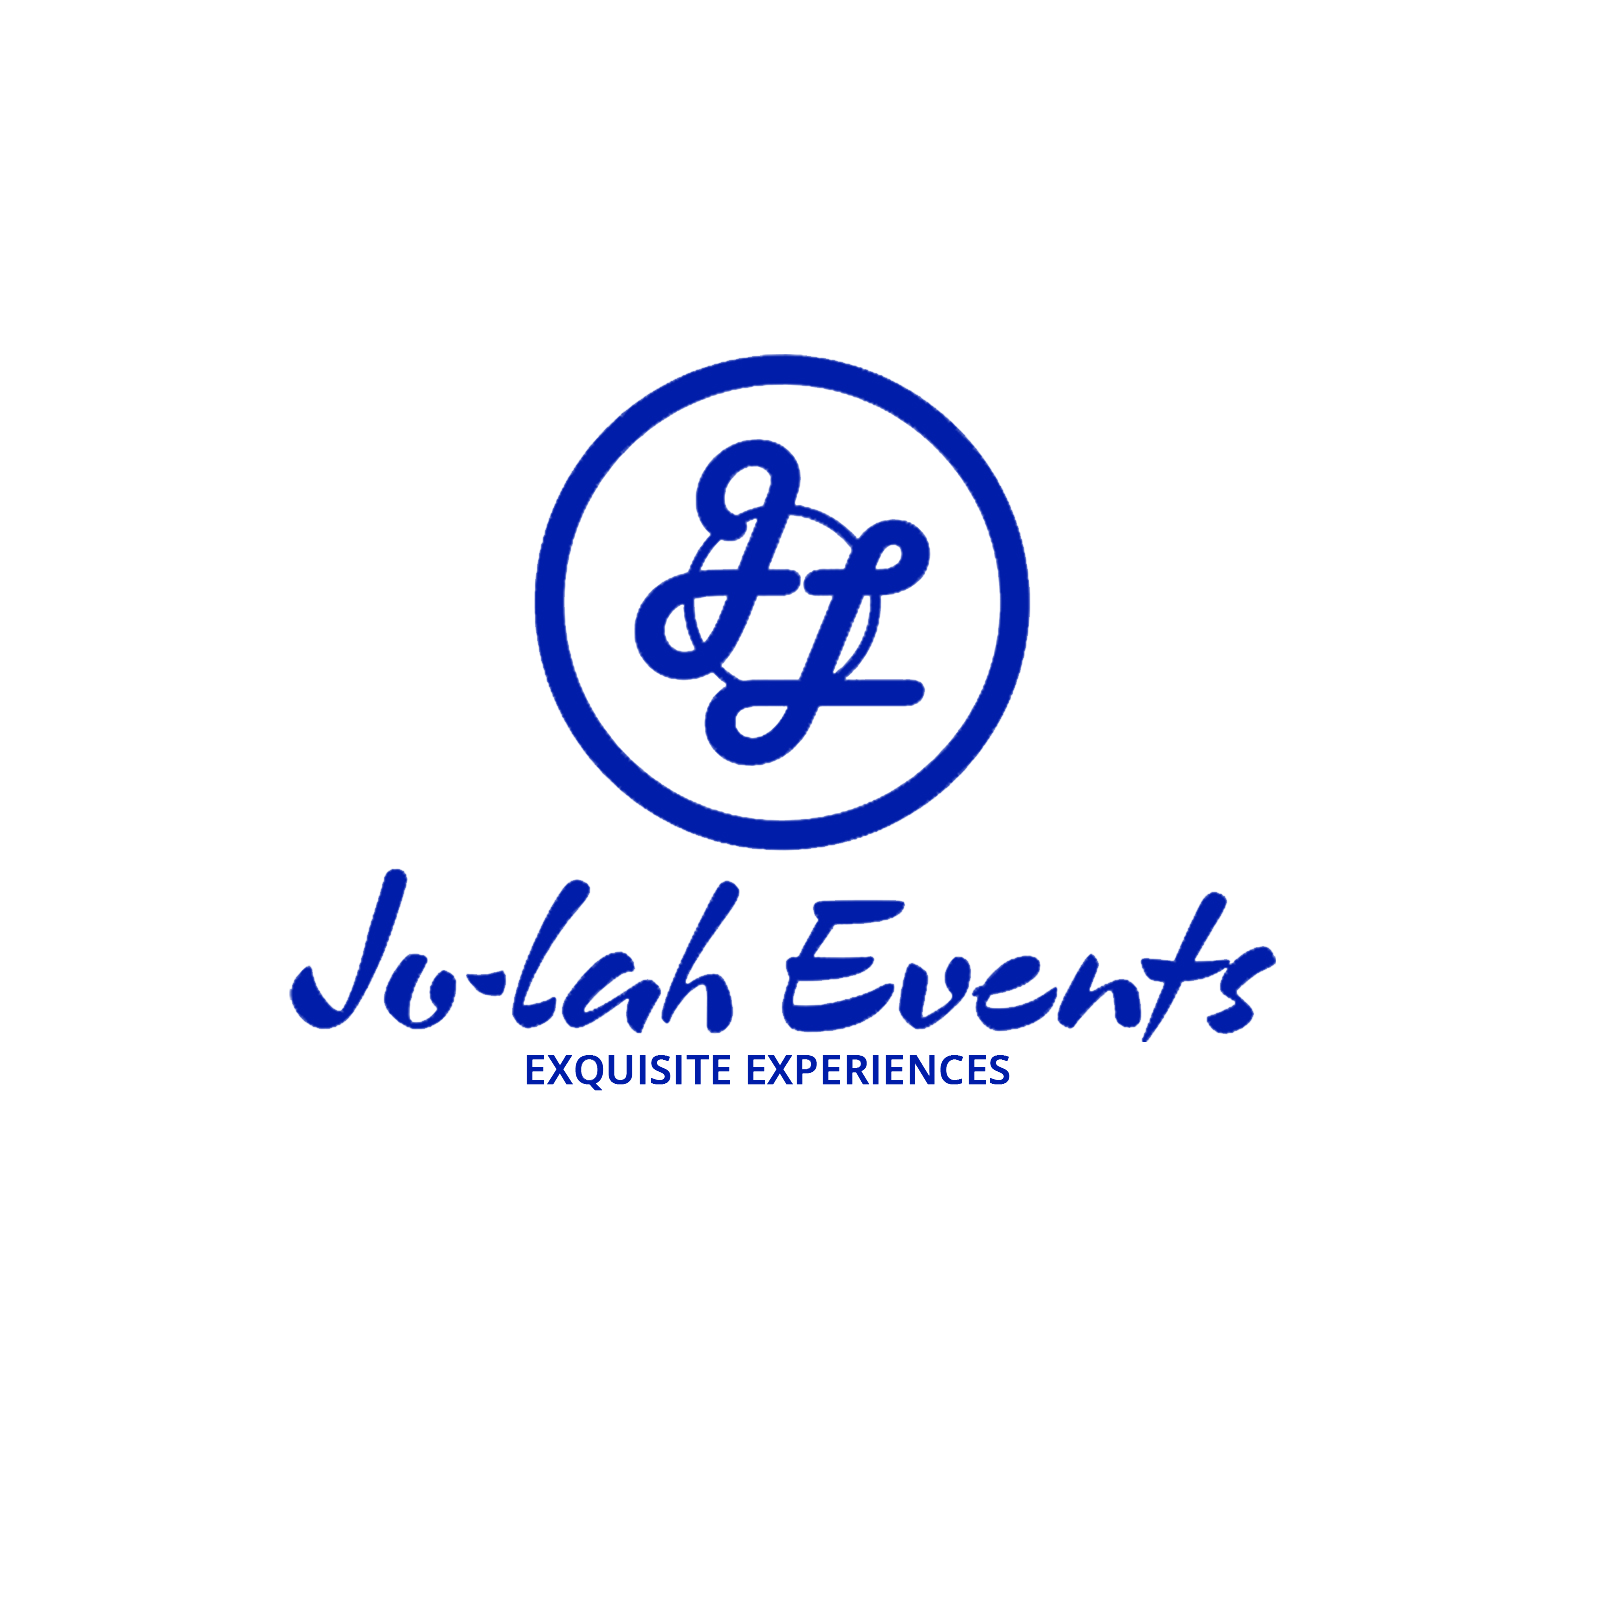 Jo-lah Events anyservice service provider